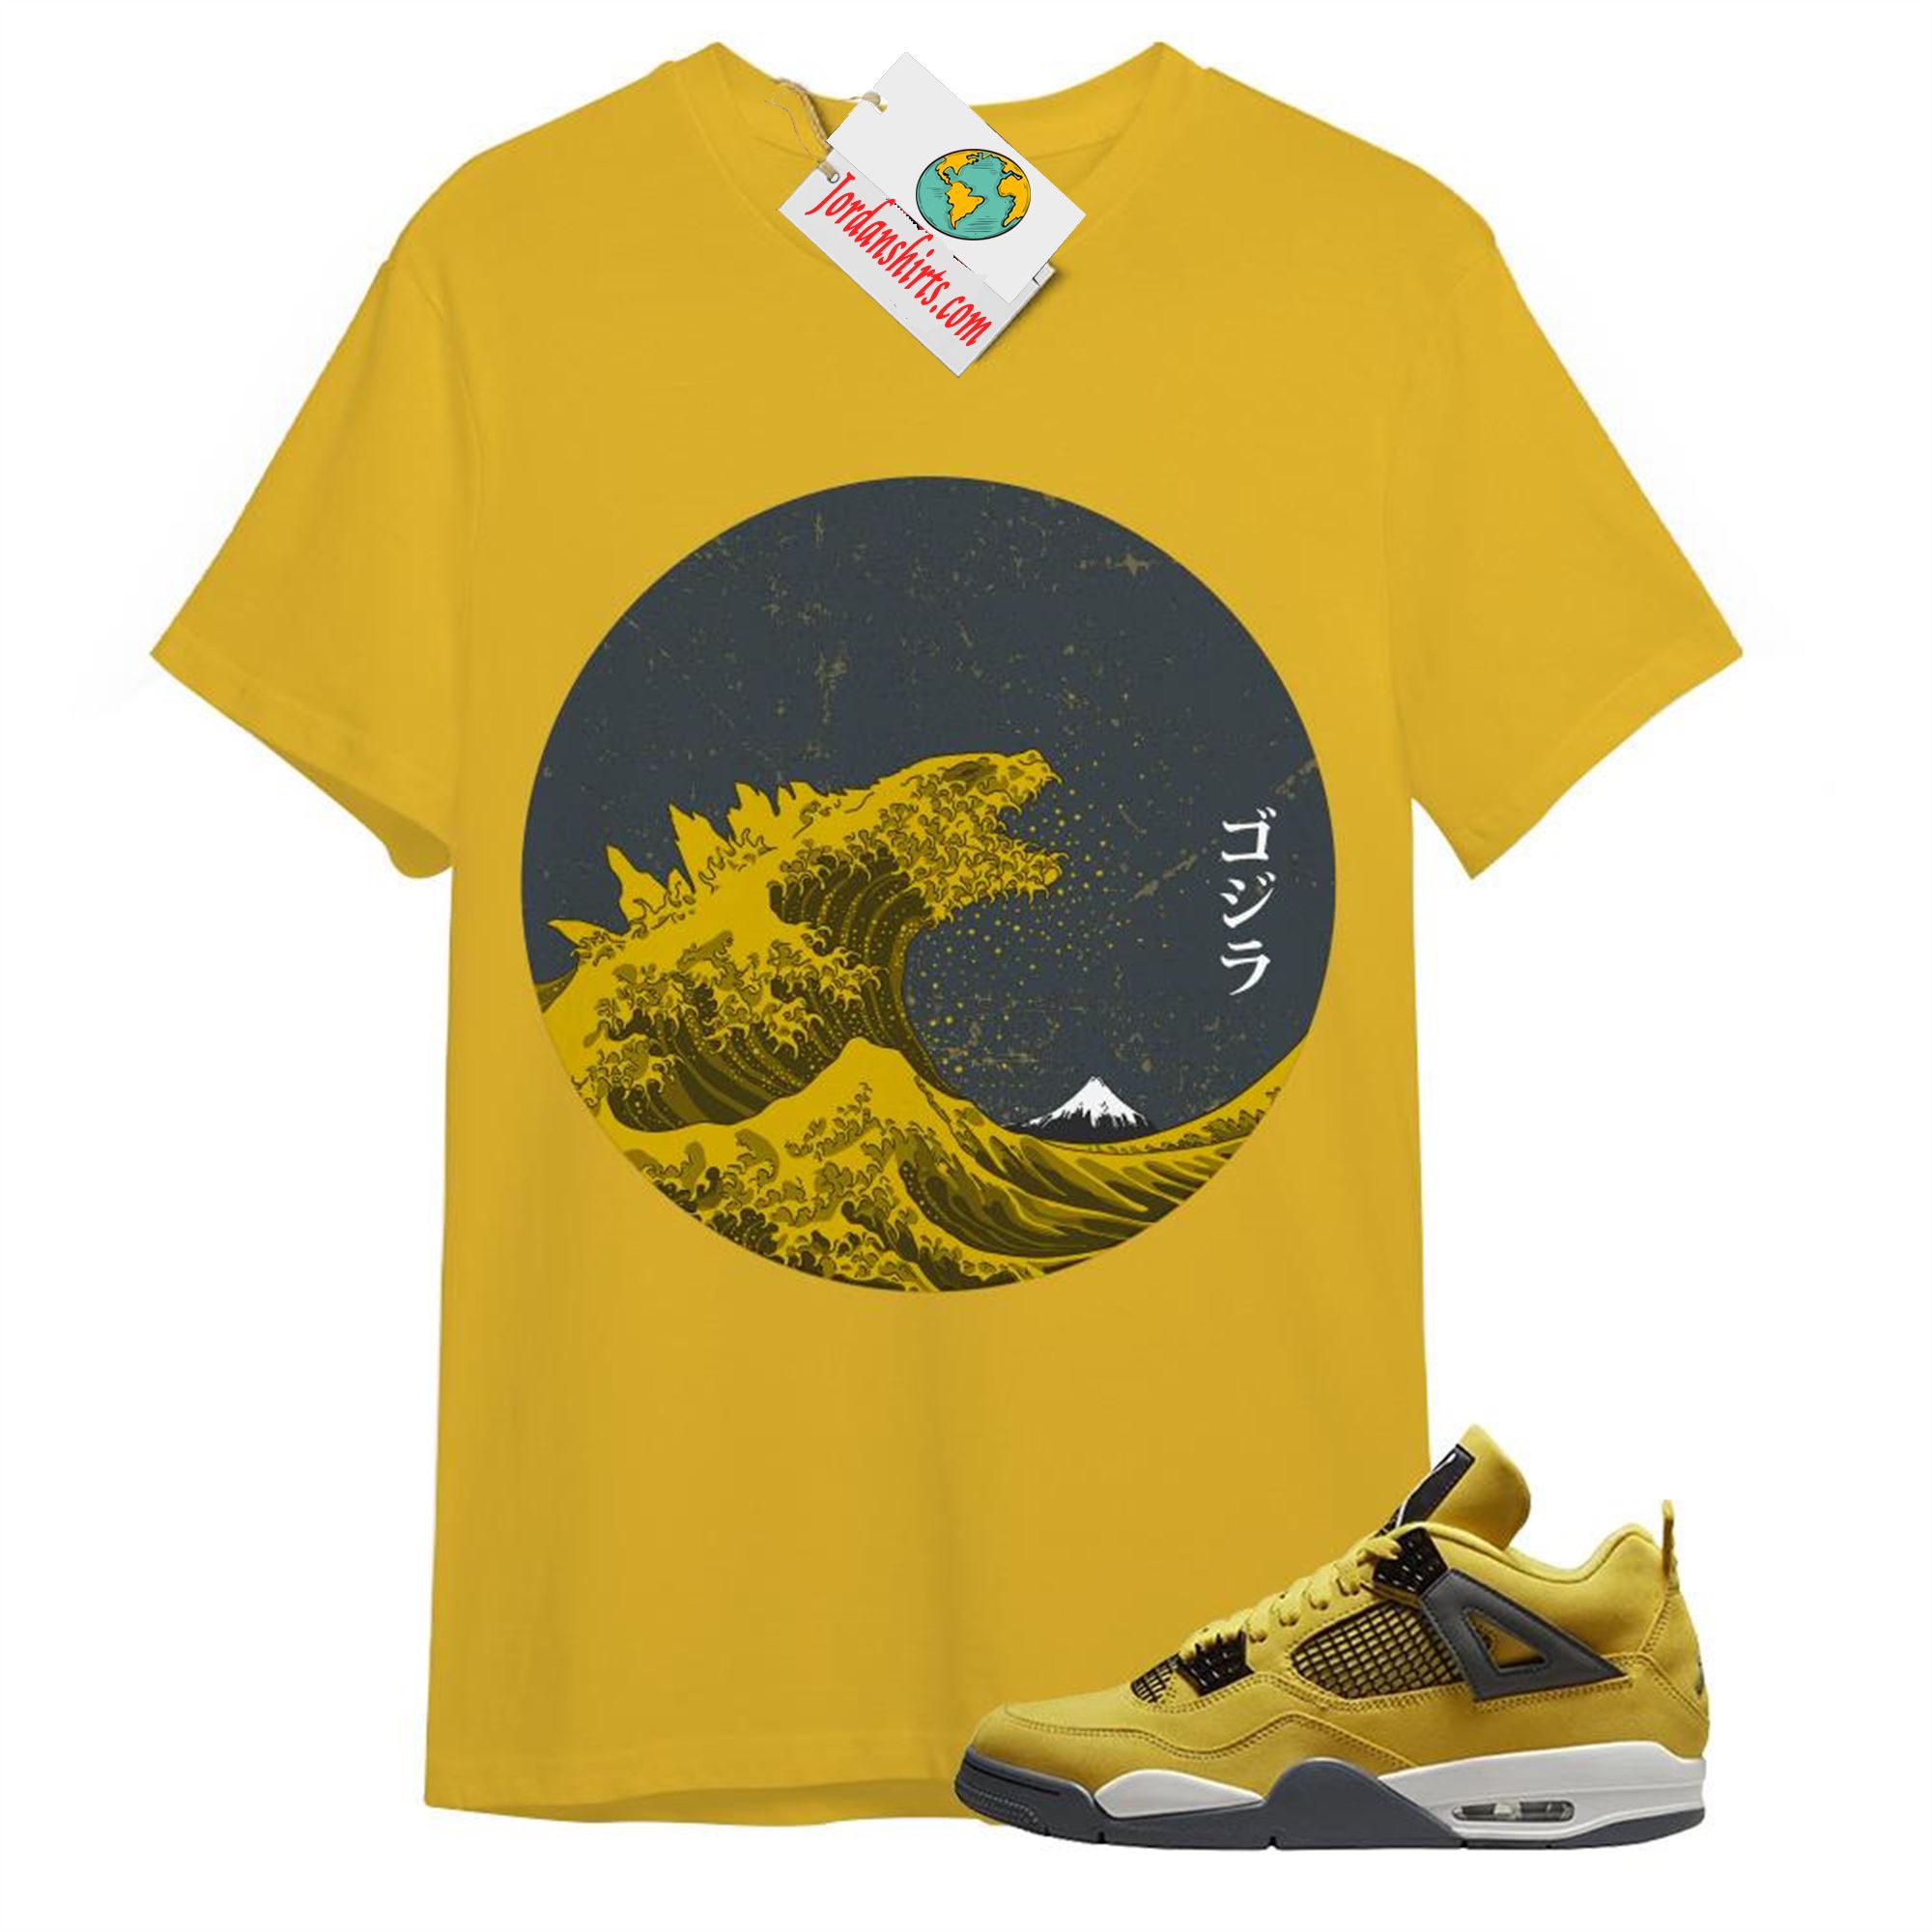 Jordan 4 Shirt, Godzilla Yellow T-shirt Air Jordan 4 Tour Yellowlightning 4s Size Up To 5xl